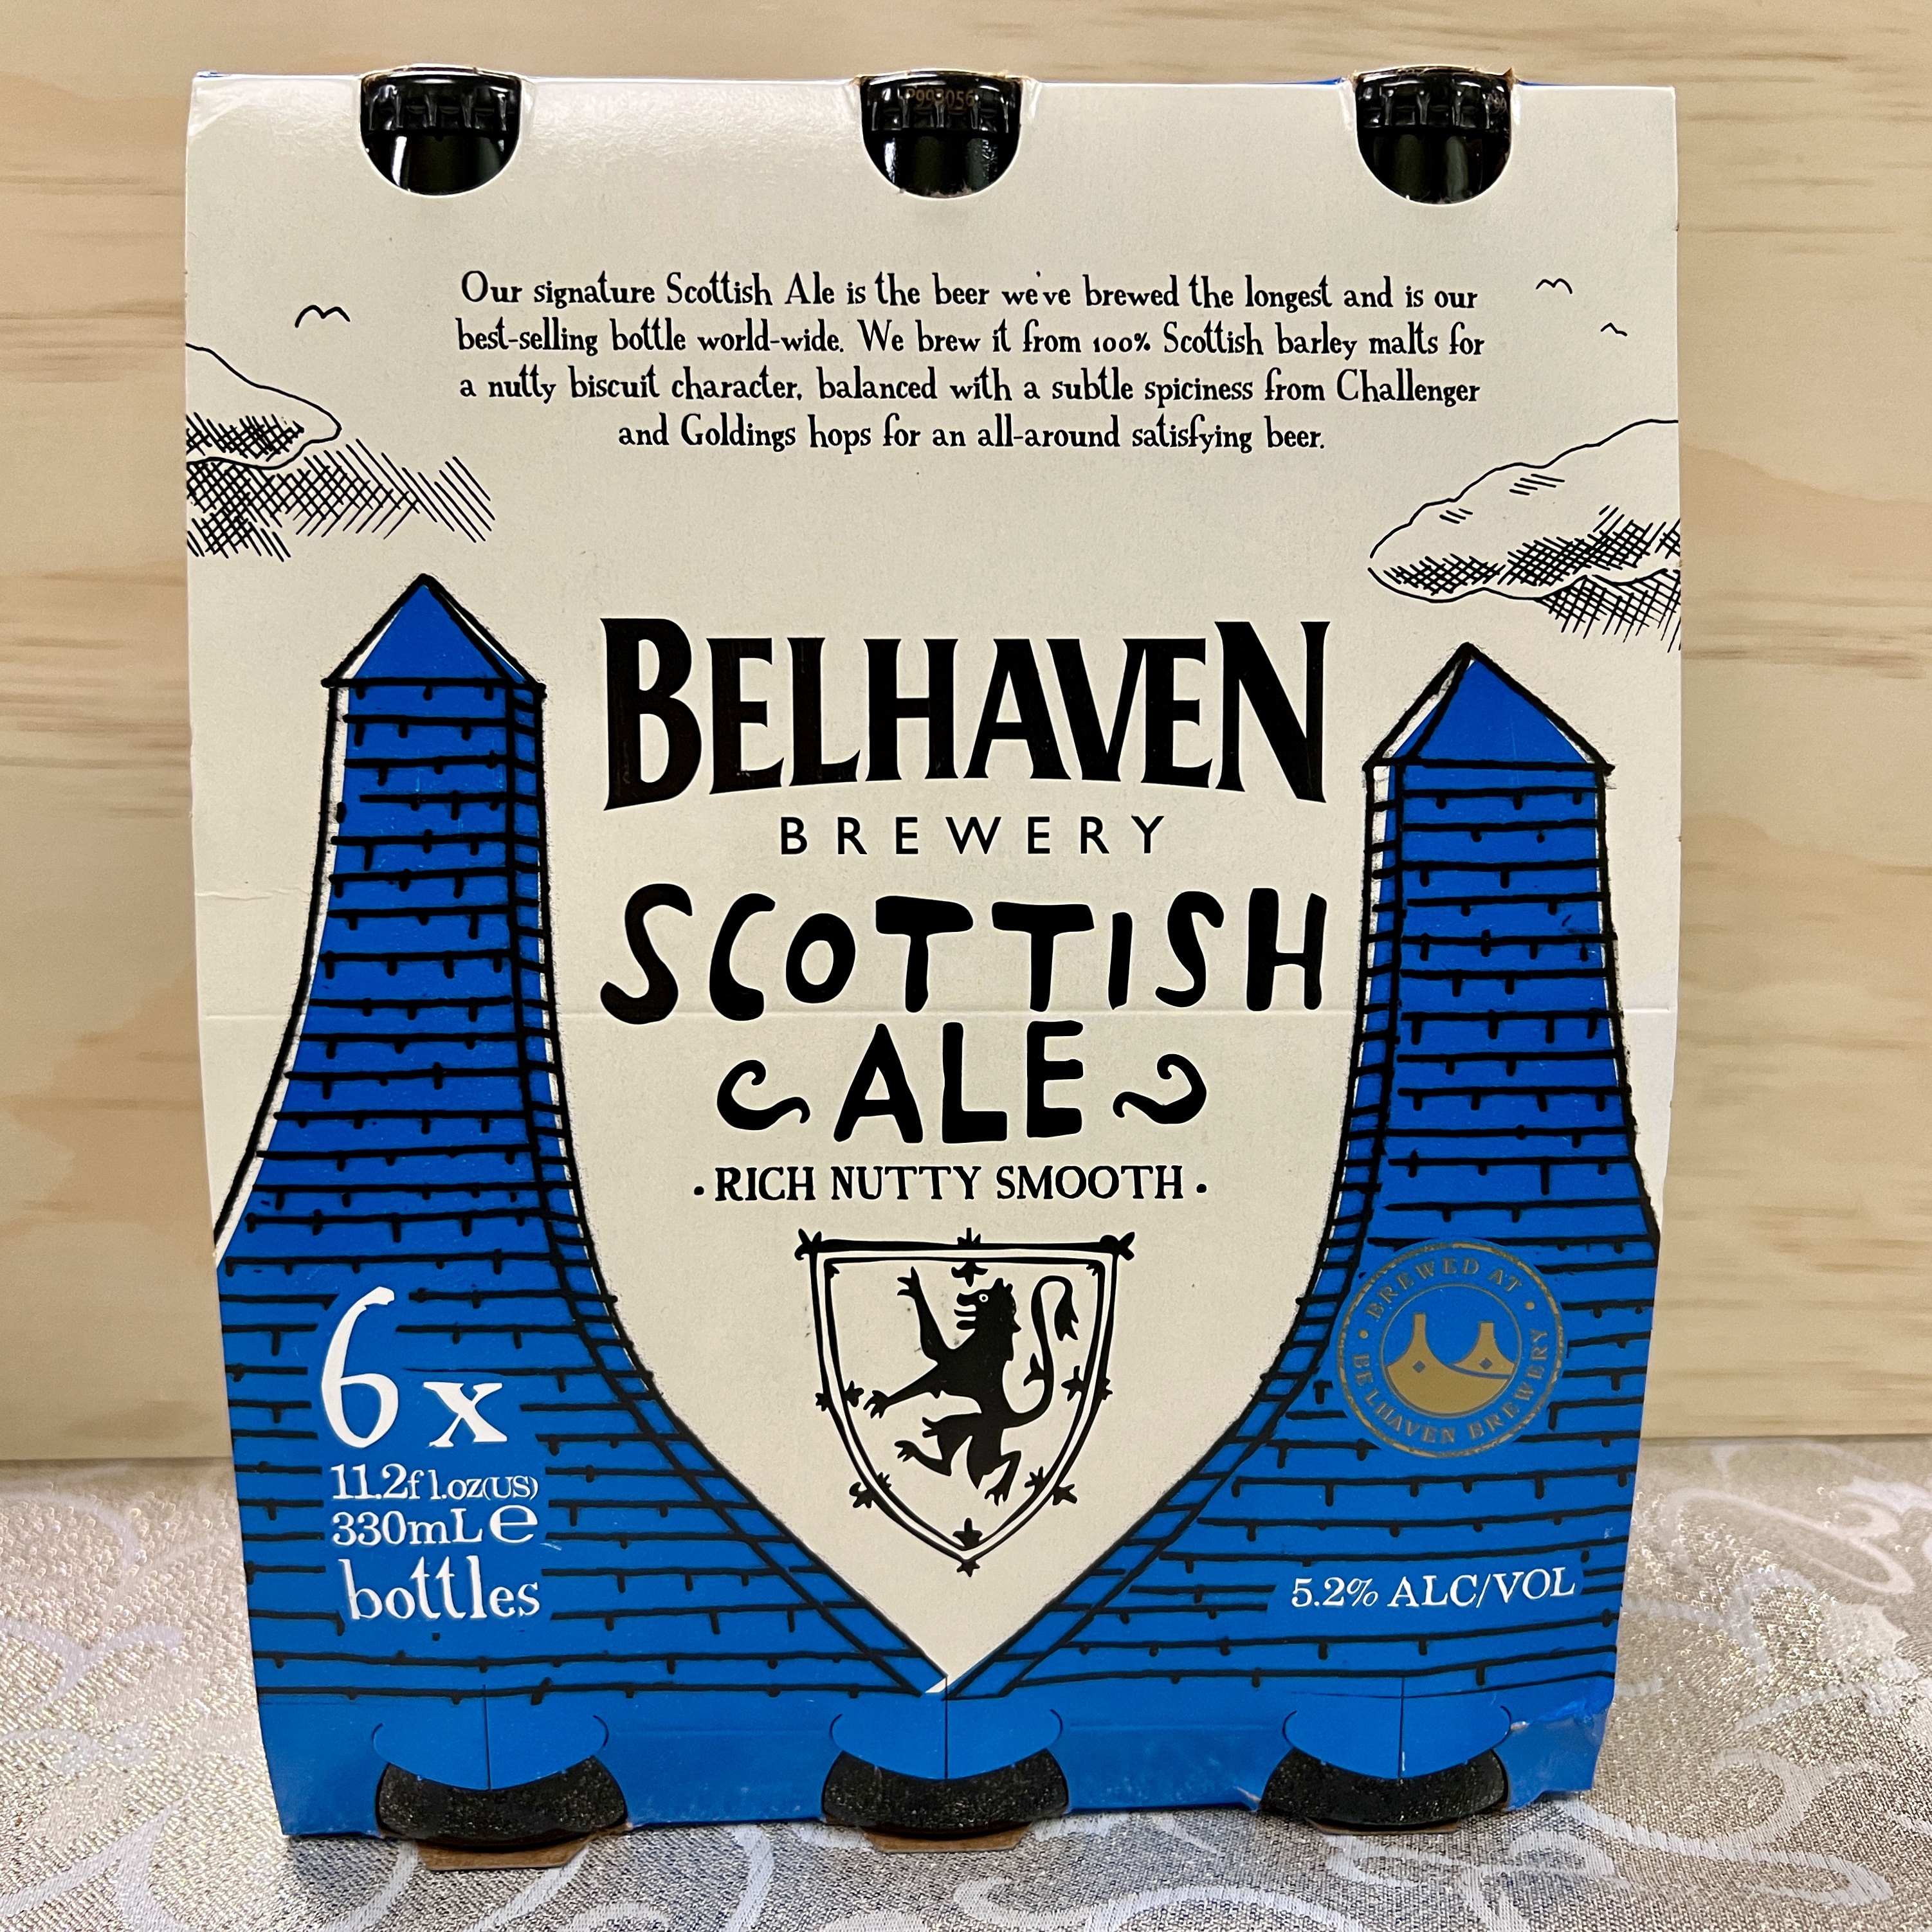 Belhaven Scottish Ale 6 x 12oz bottles